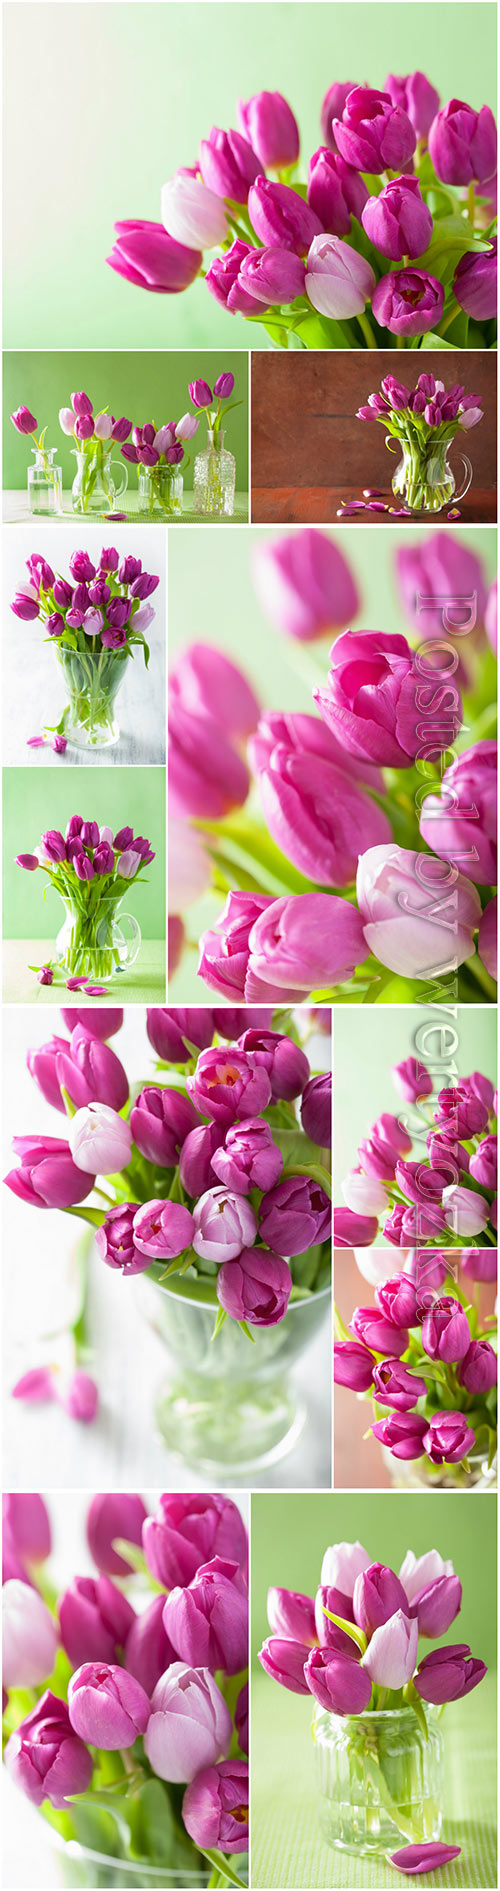 Tulips, spring flowers beautiful stock photo